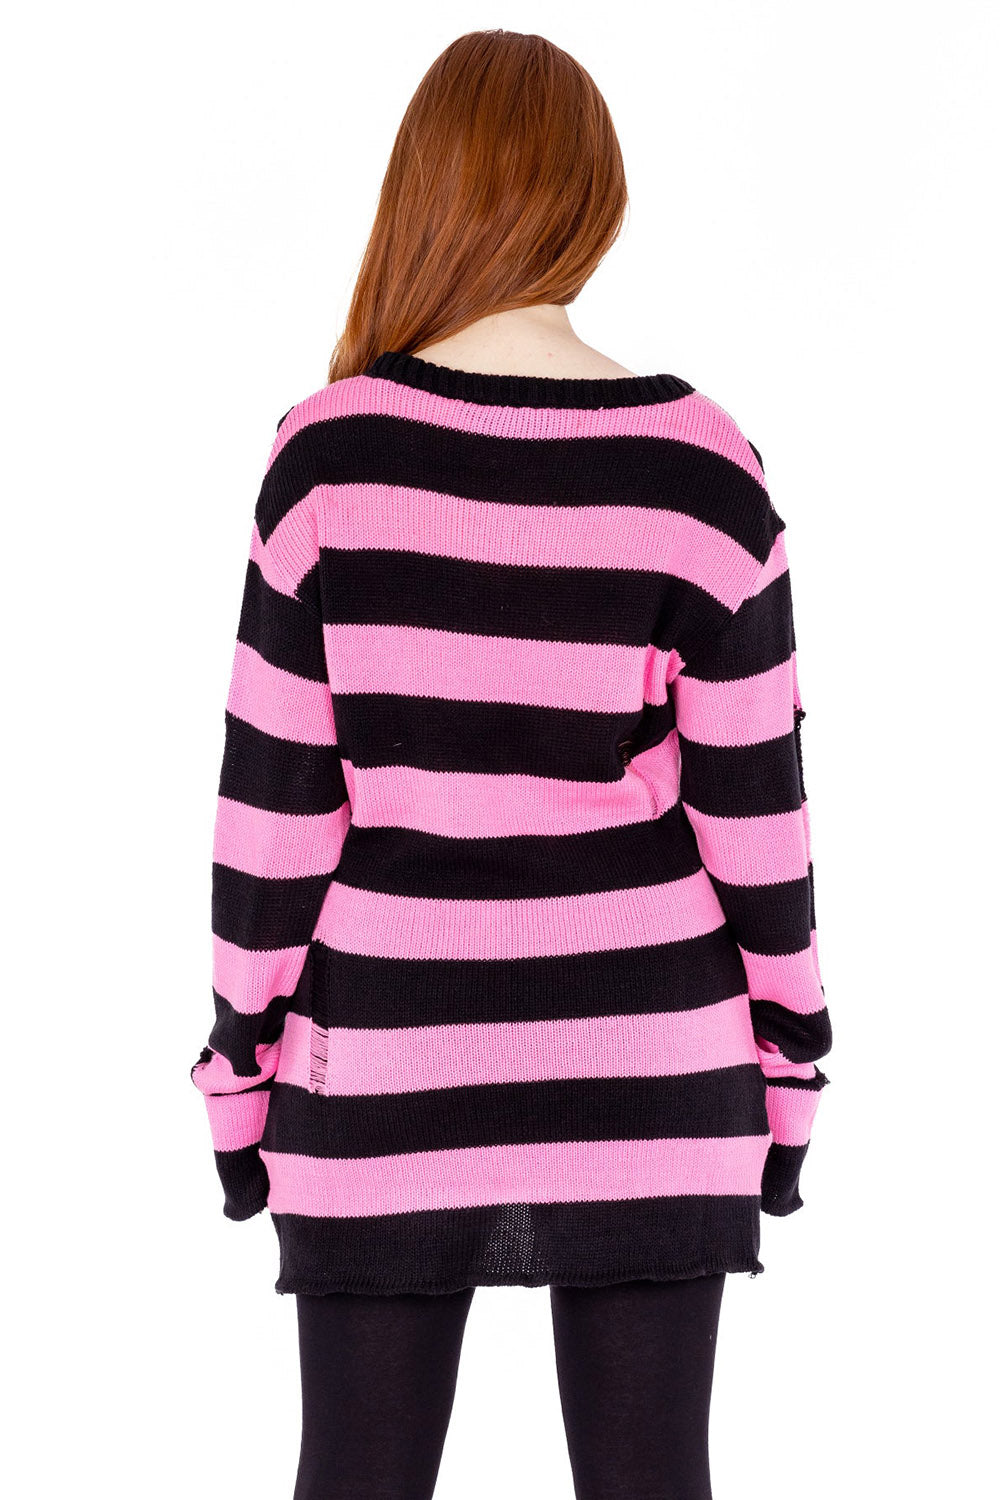 distressed oversized grunge striped sweater